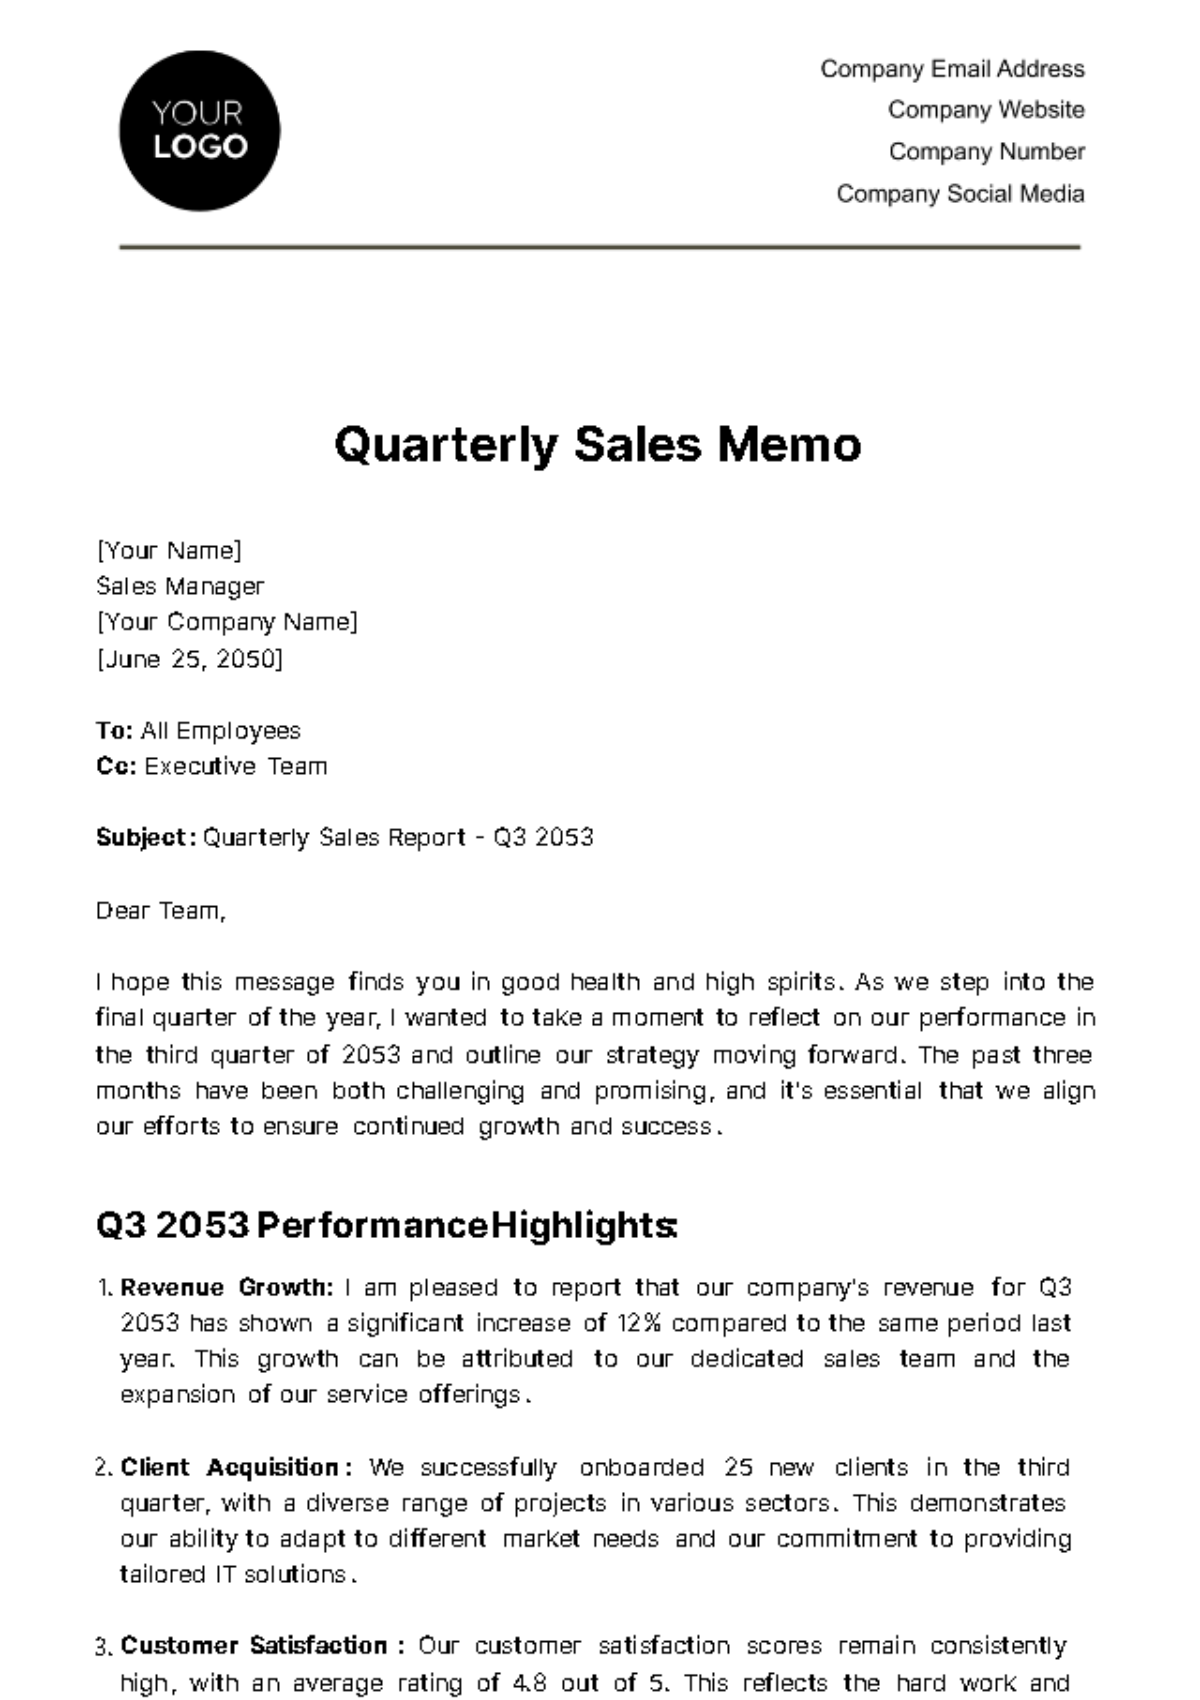 Quarterly Sales Memo Template